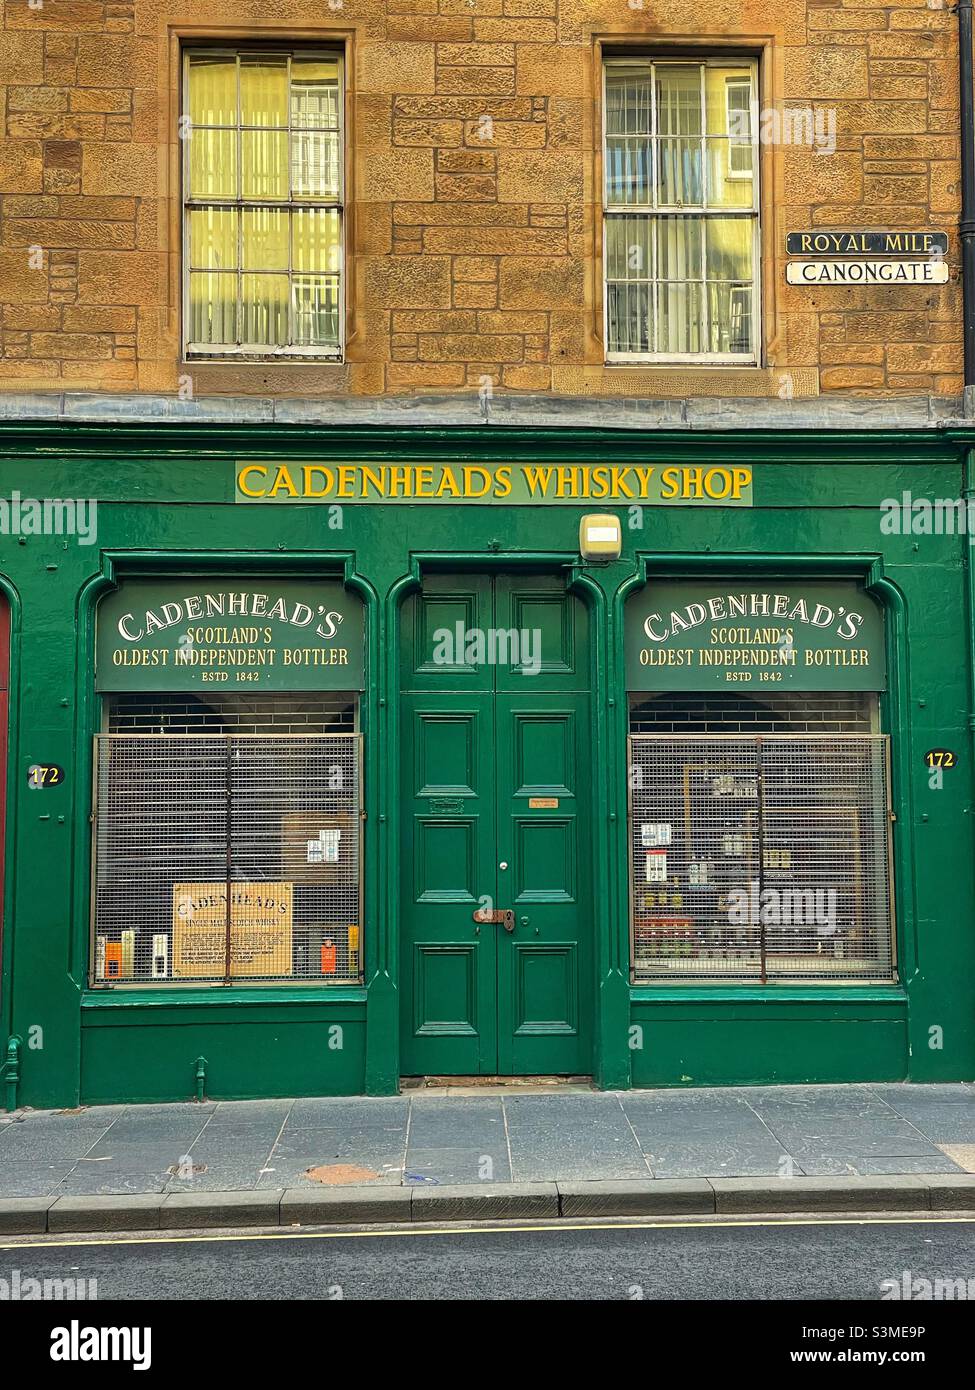 Cadenhead’s Whisky shop, The Royal Mile, Edinburgh, Scotland. Stock Photo